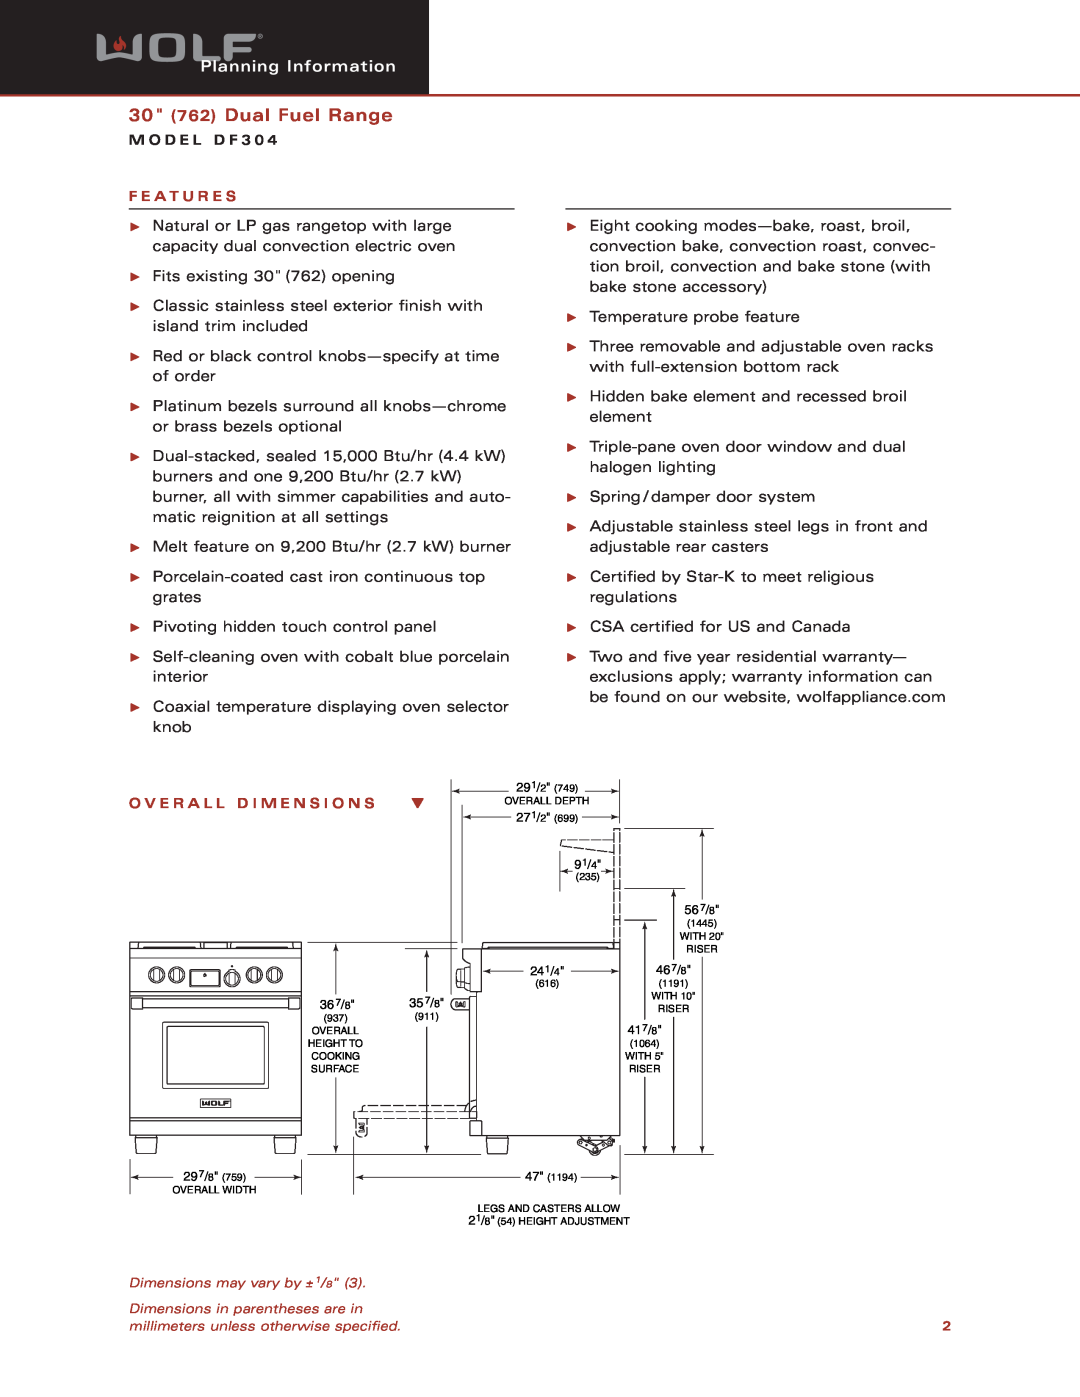 Sub-Zero DF304 dimensions 30 762 Dual Fuel Range, Planning Information, M O D E L D F 3, F E A T U R E S 